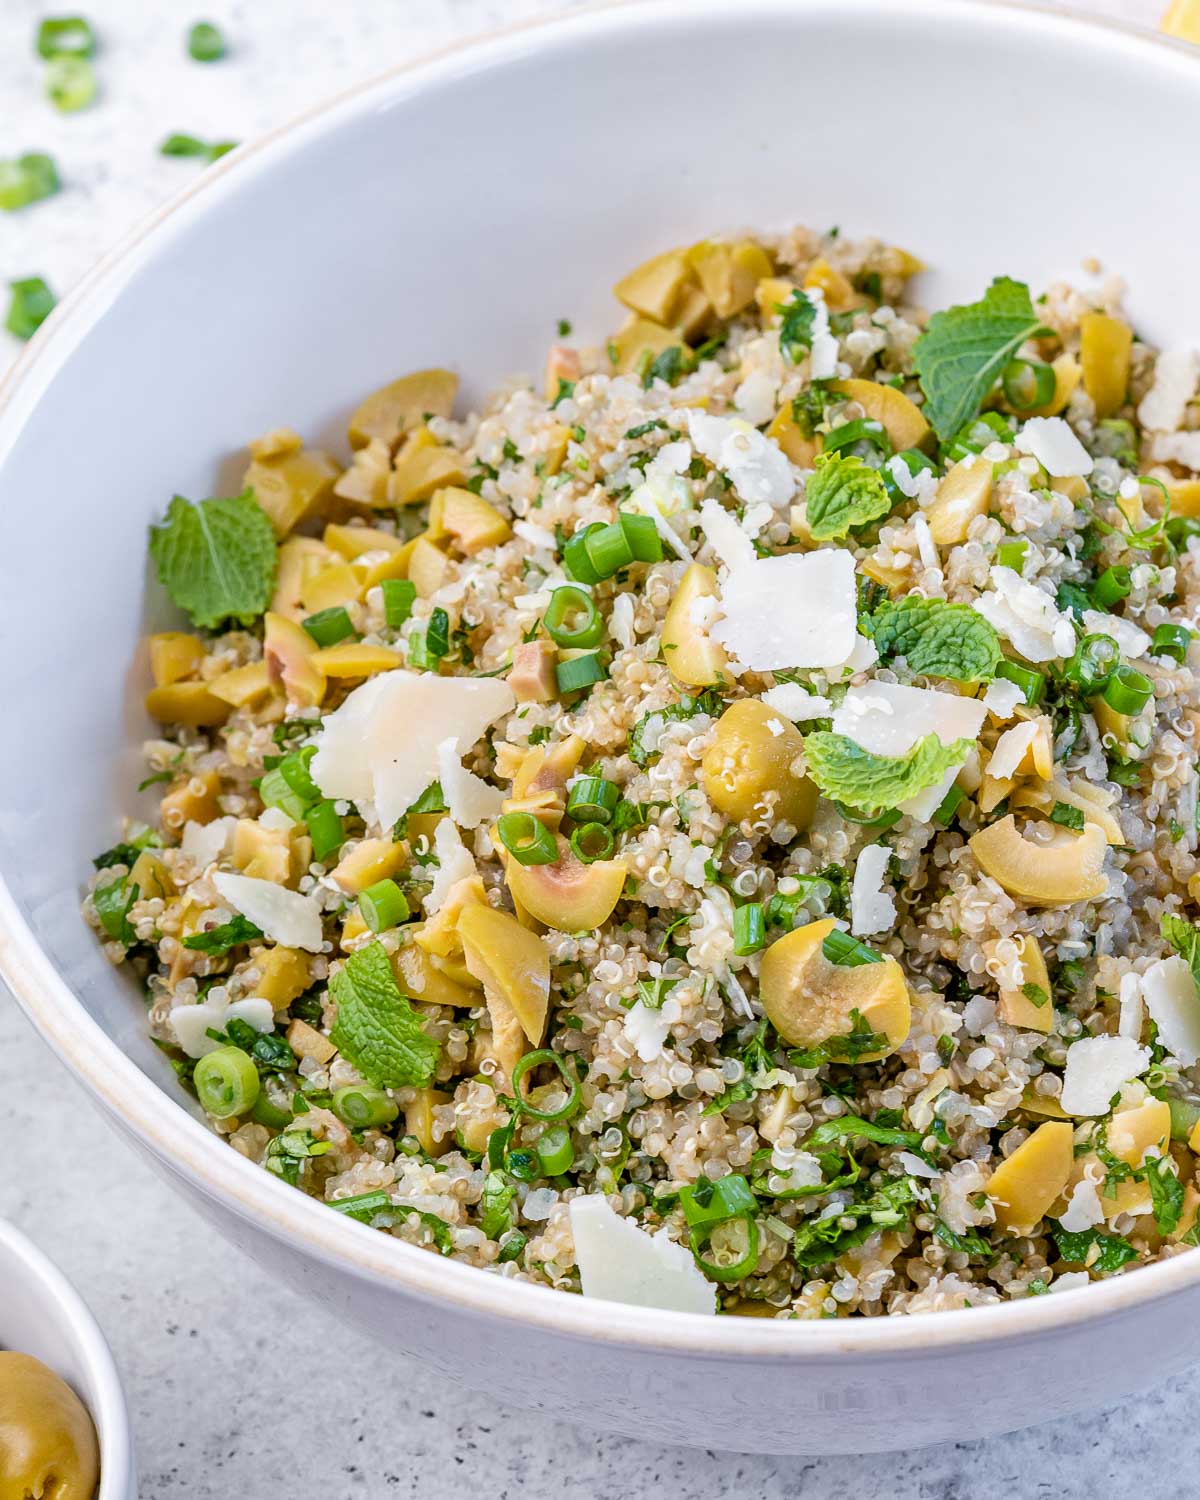 https://cleanfoodcrush.com/wp-content/uploads/2022/09/clean-Quinoa-Olive-Herbed-Salad-recipe.jpg